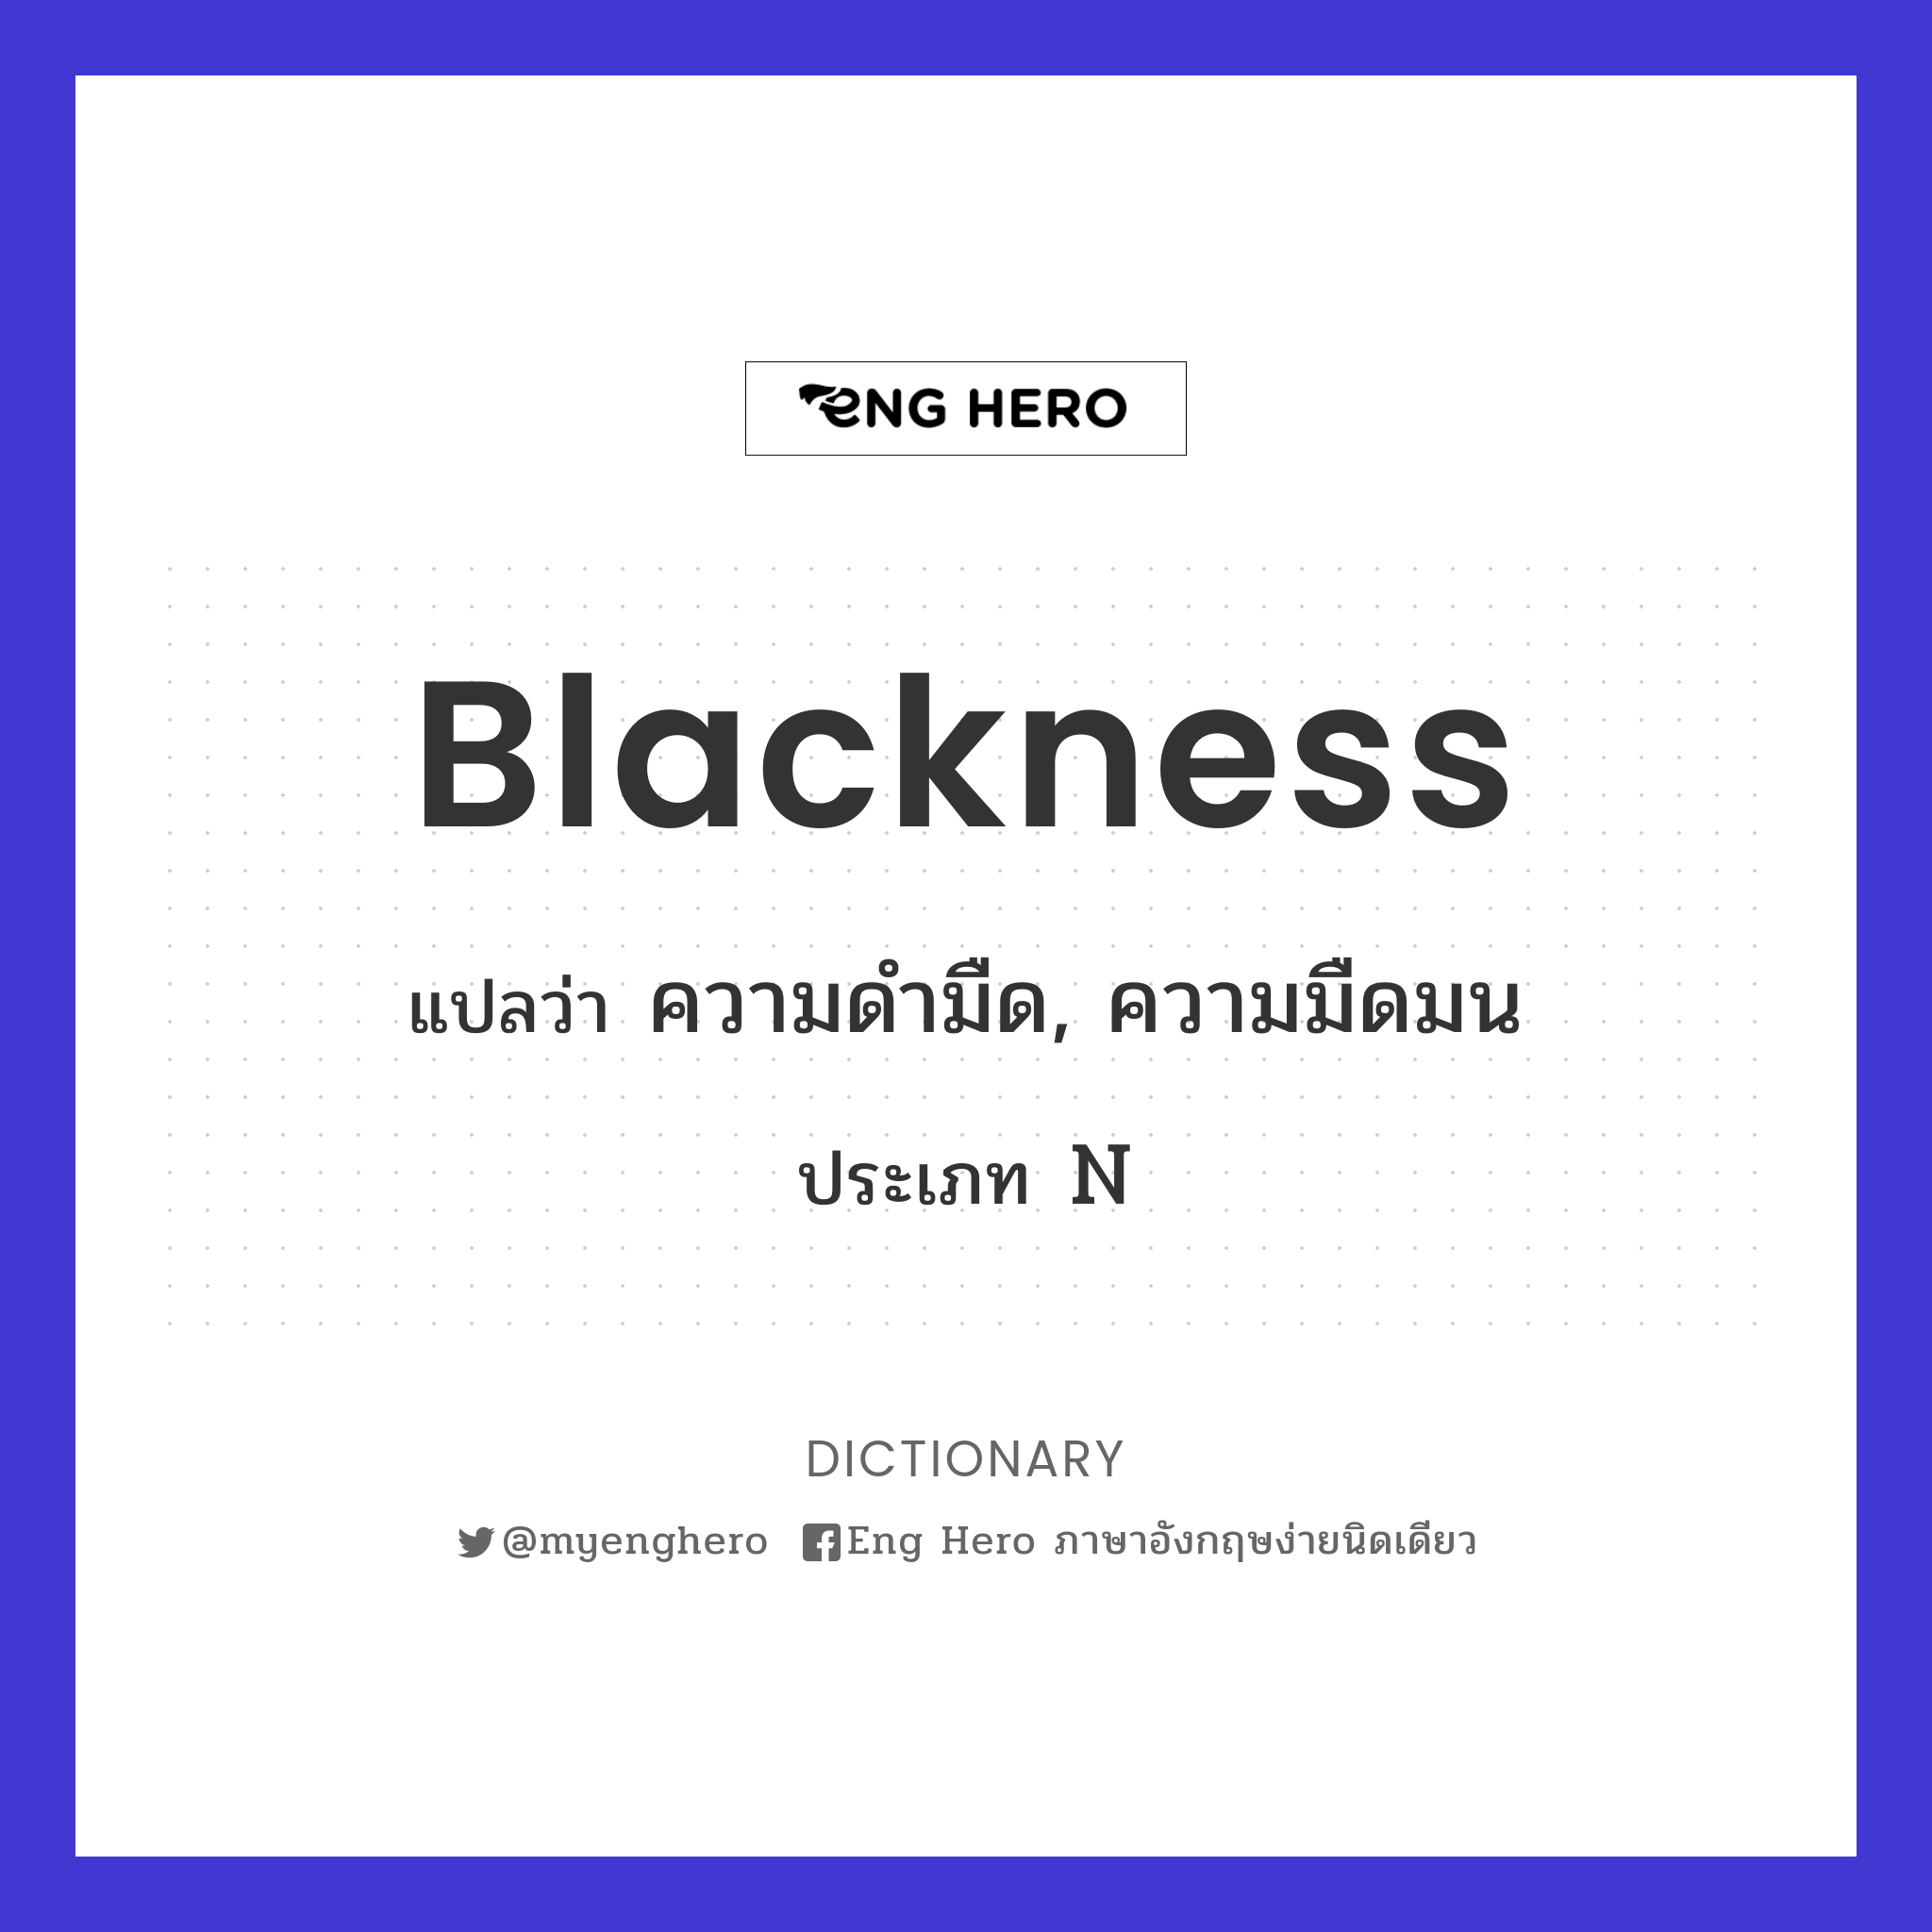 blackness